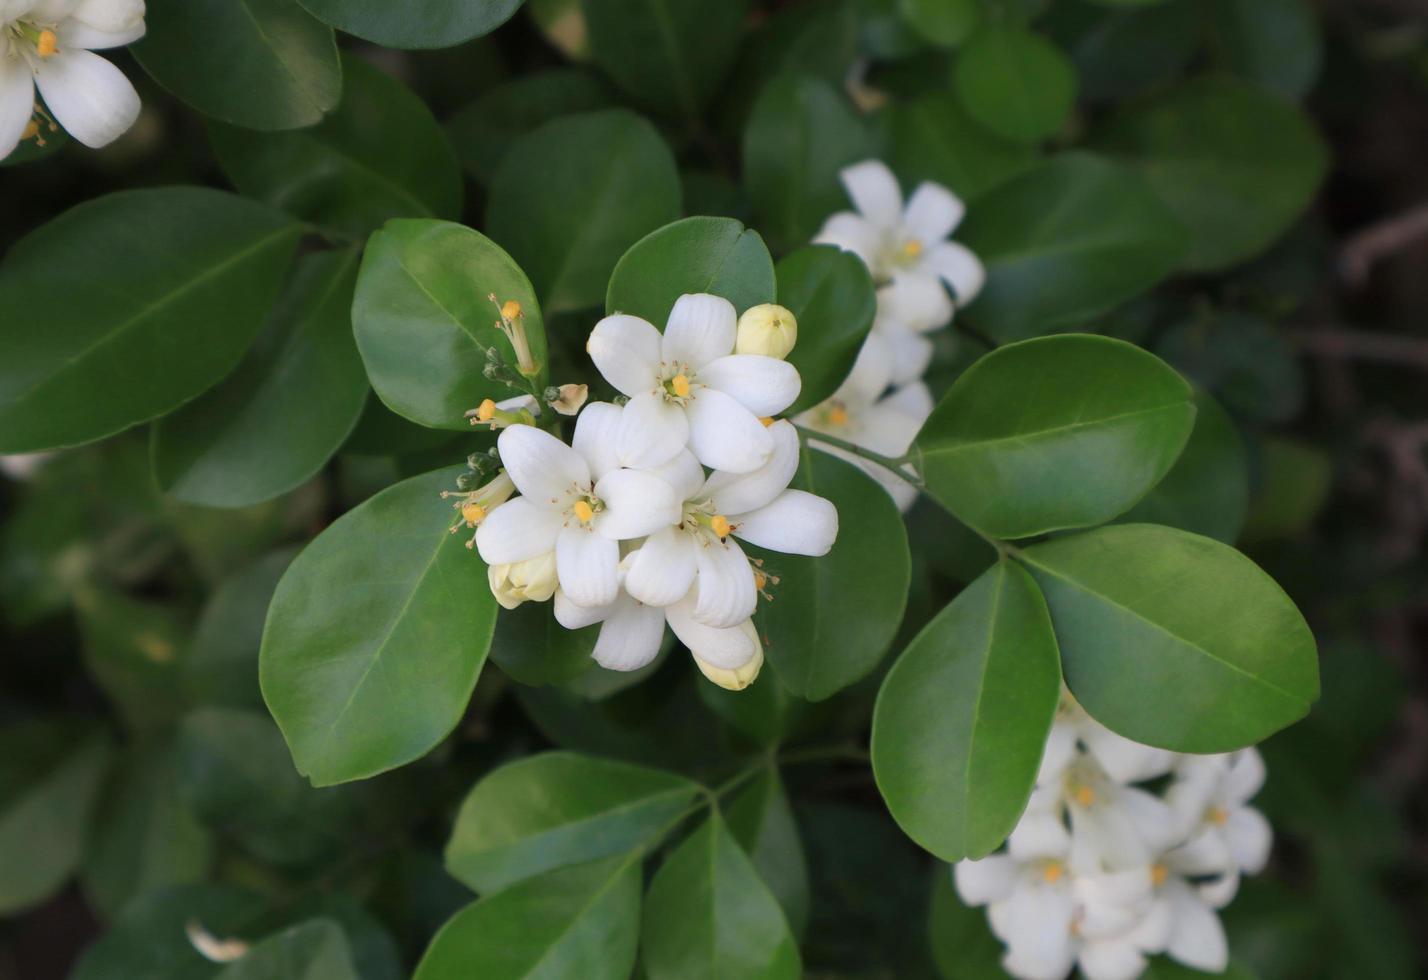 flores de jazmín naranja o murraya paniculata. cierra el ramo de flores  blancas sobre hojas verdes